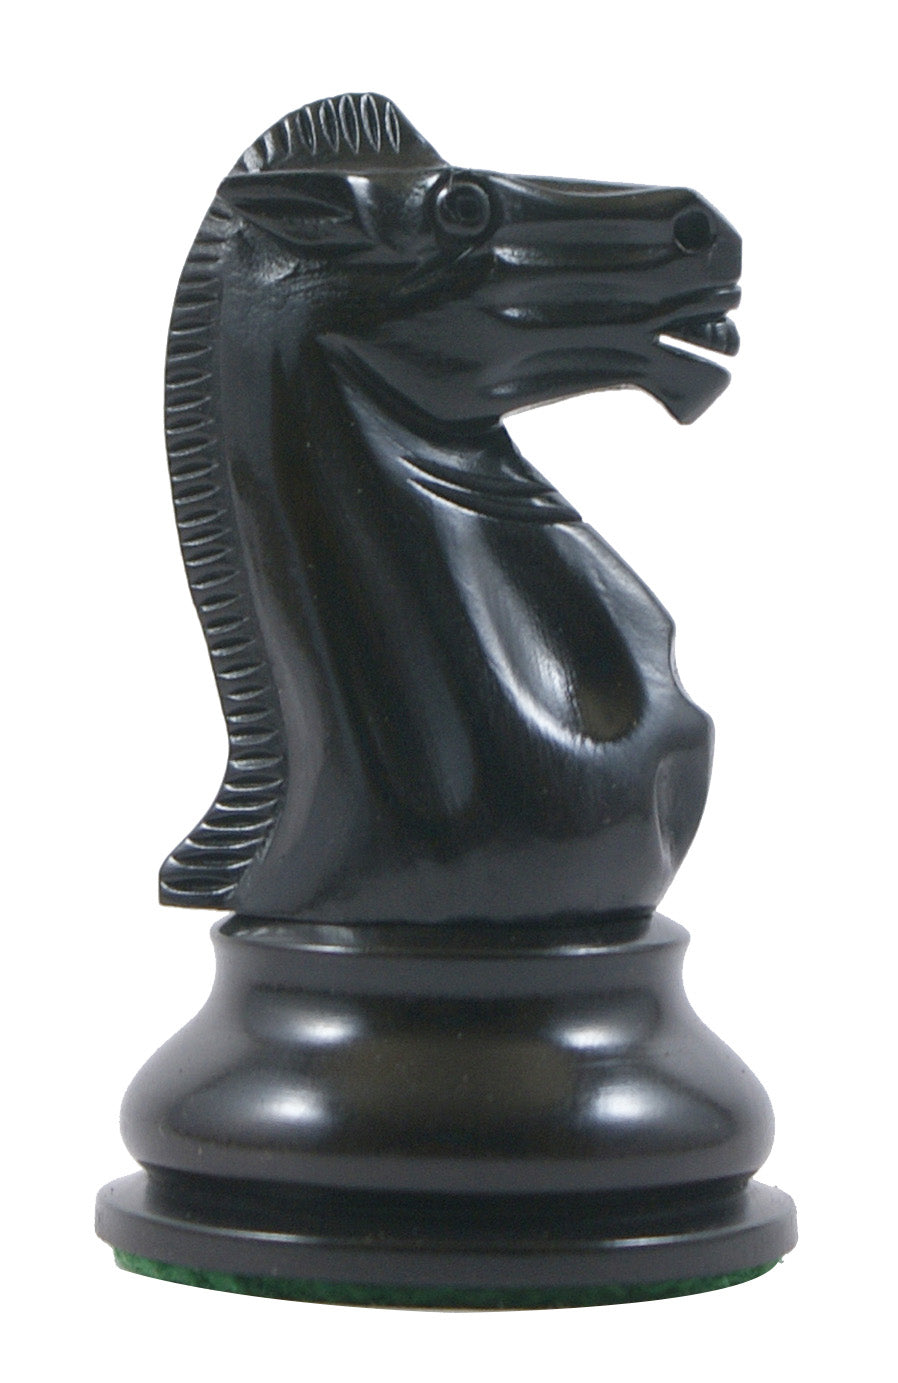 French Regѐnce Antique Chessmen - www.ChessAntique.com